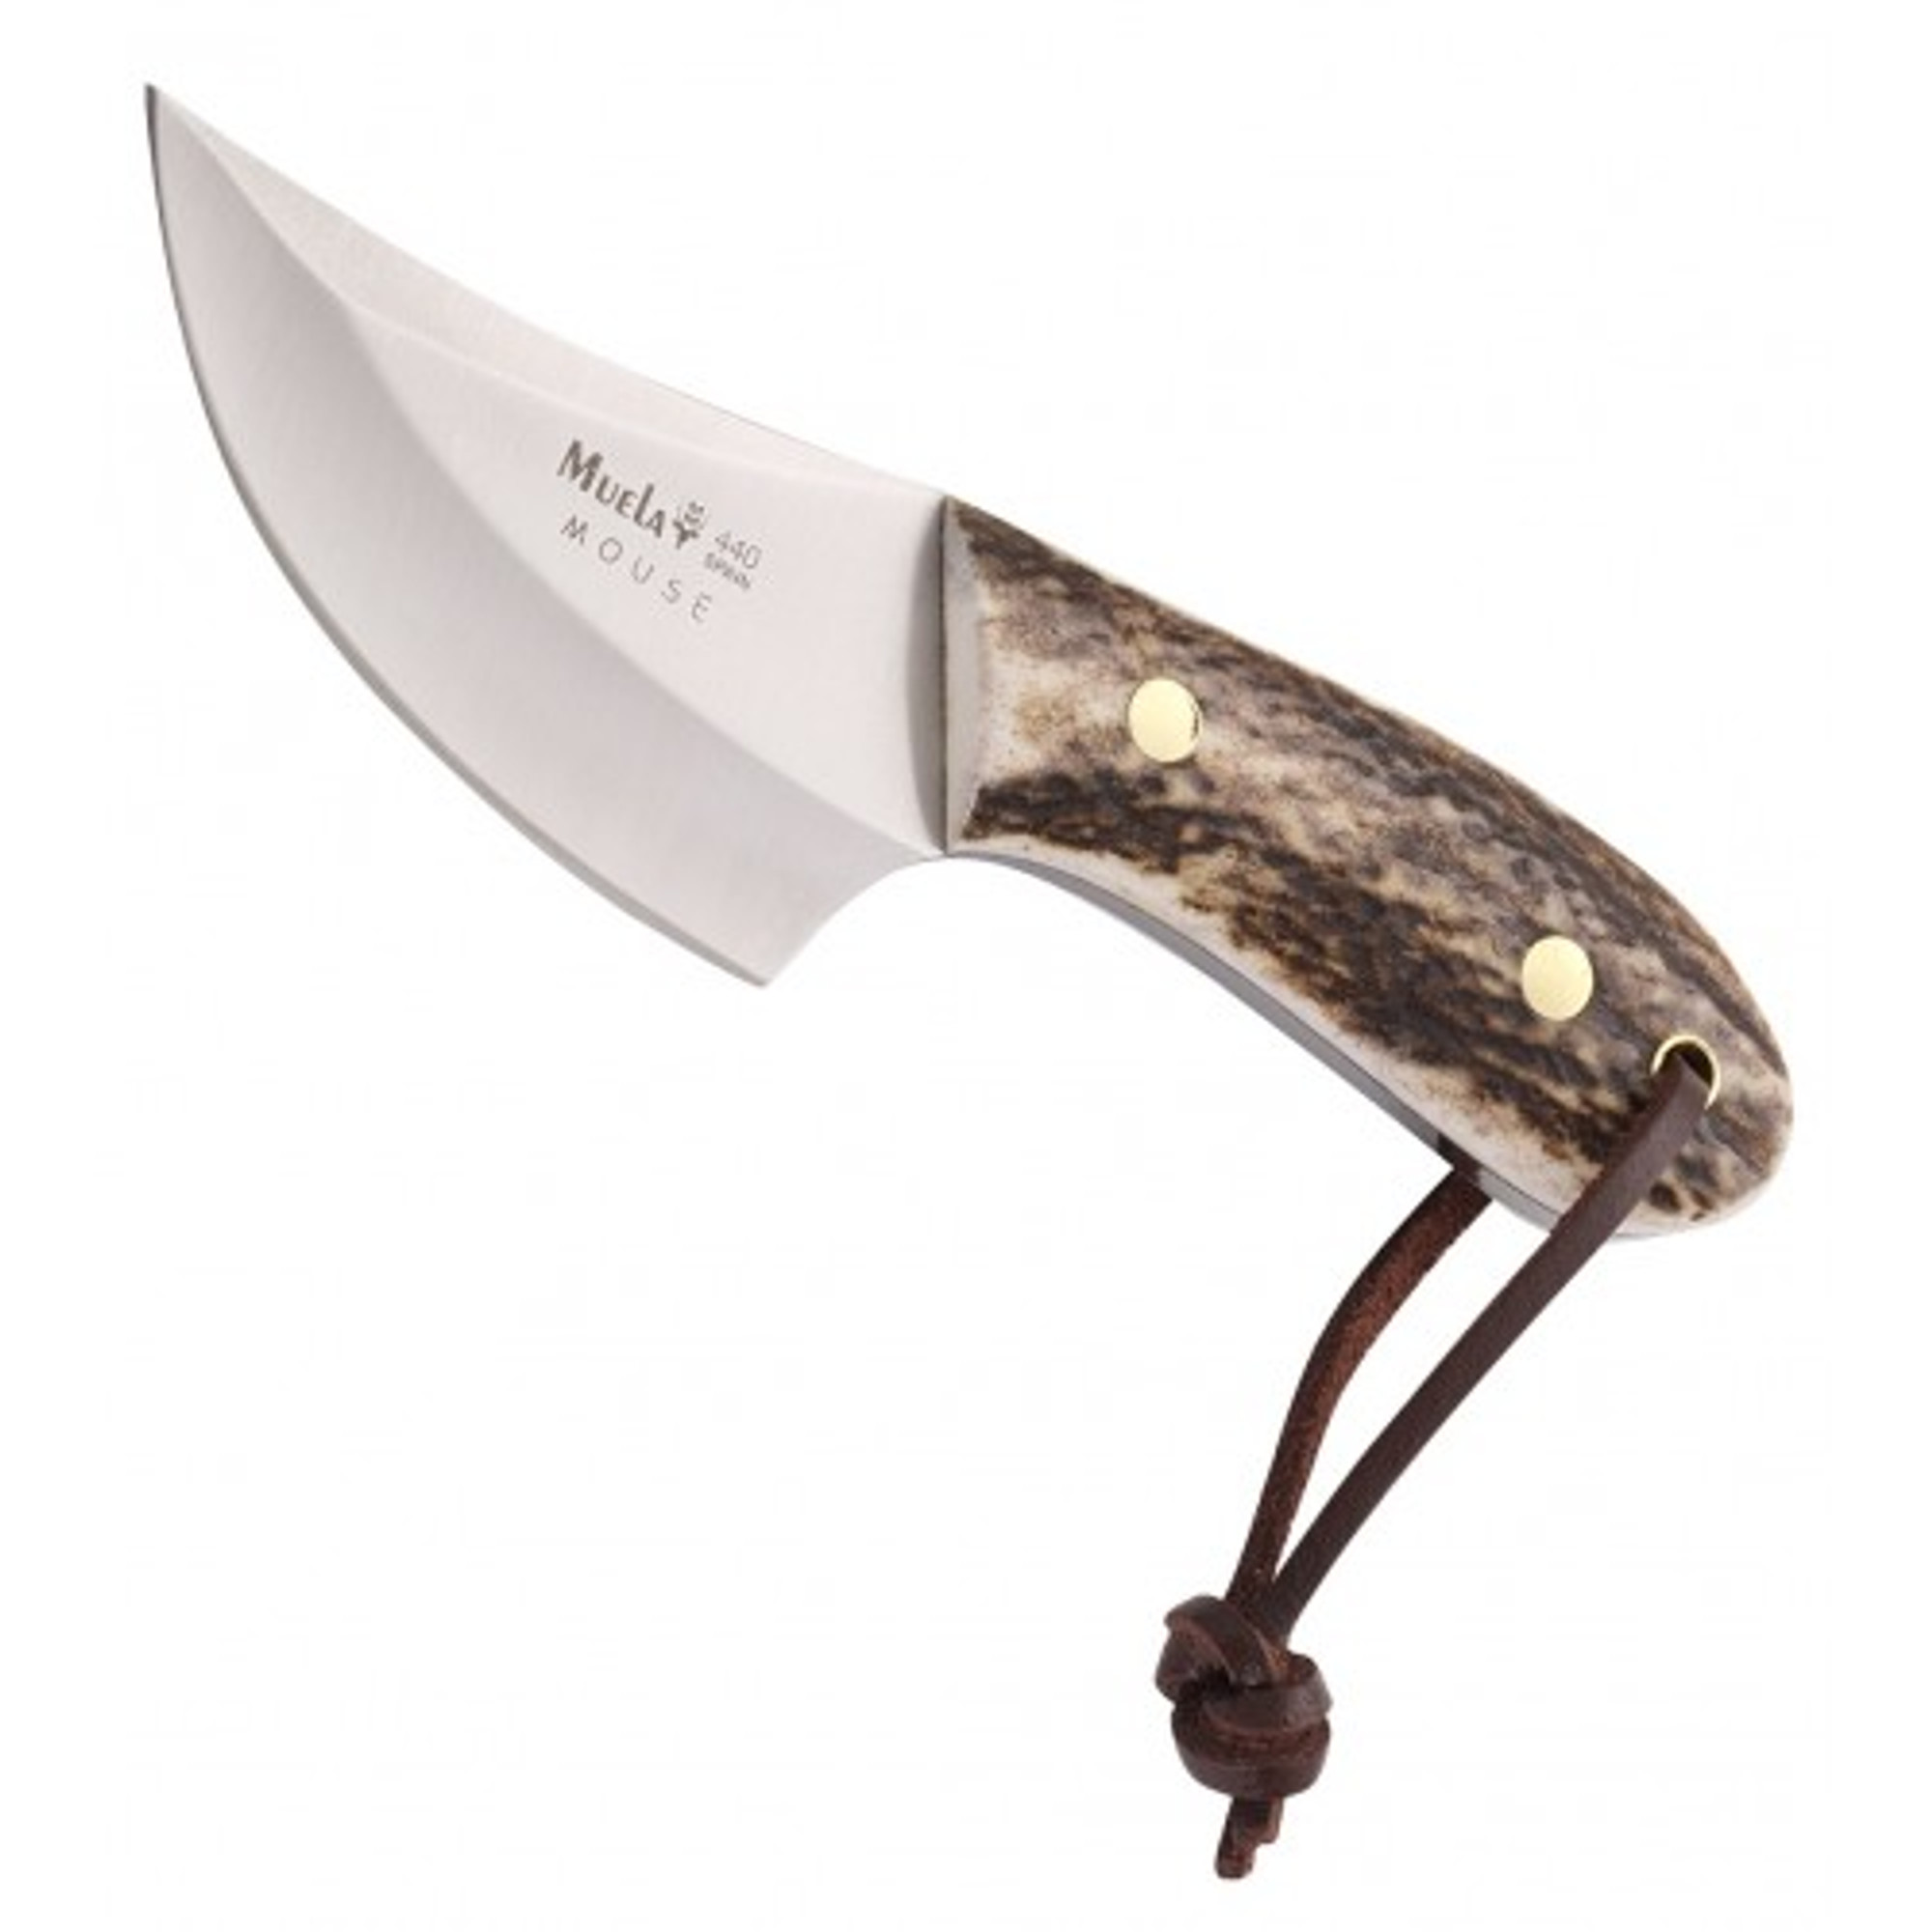 MUELA MOUSE-7A, X50CrMoV15, 2-3/4" Fixed Blade Skinning Knife, Deer Horn Handle